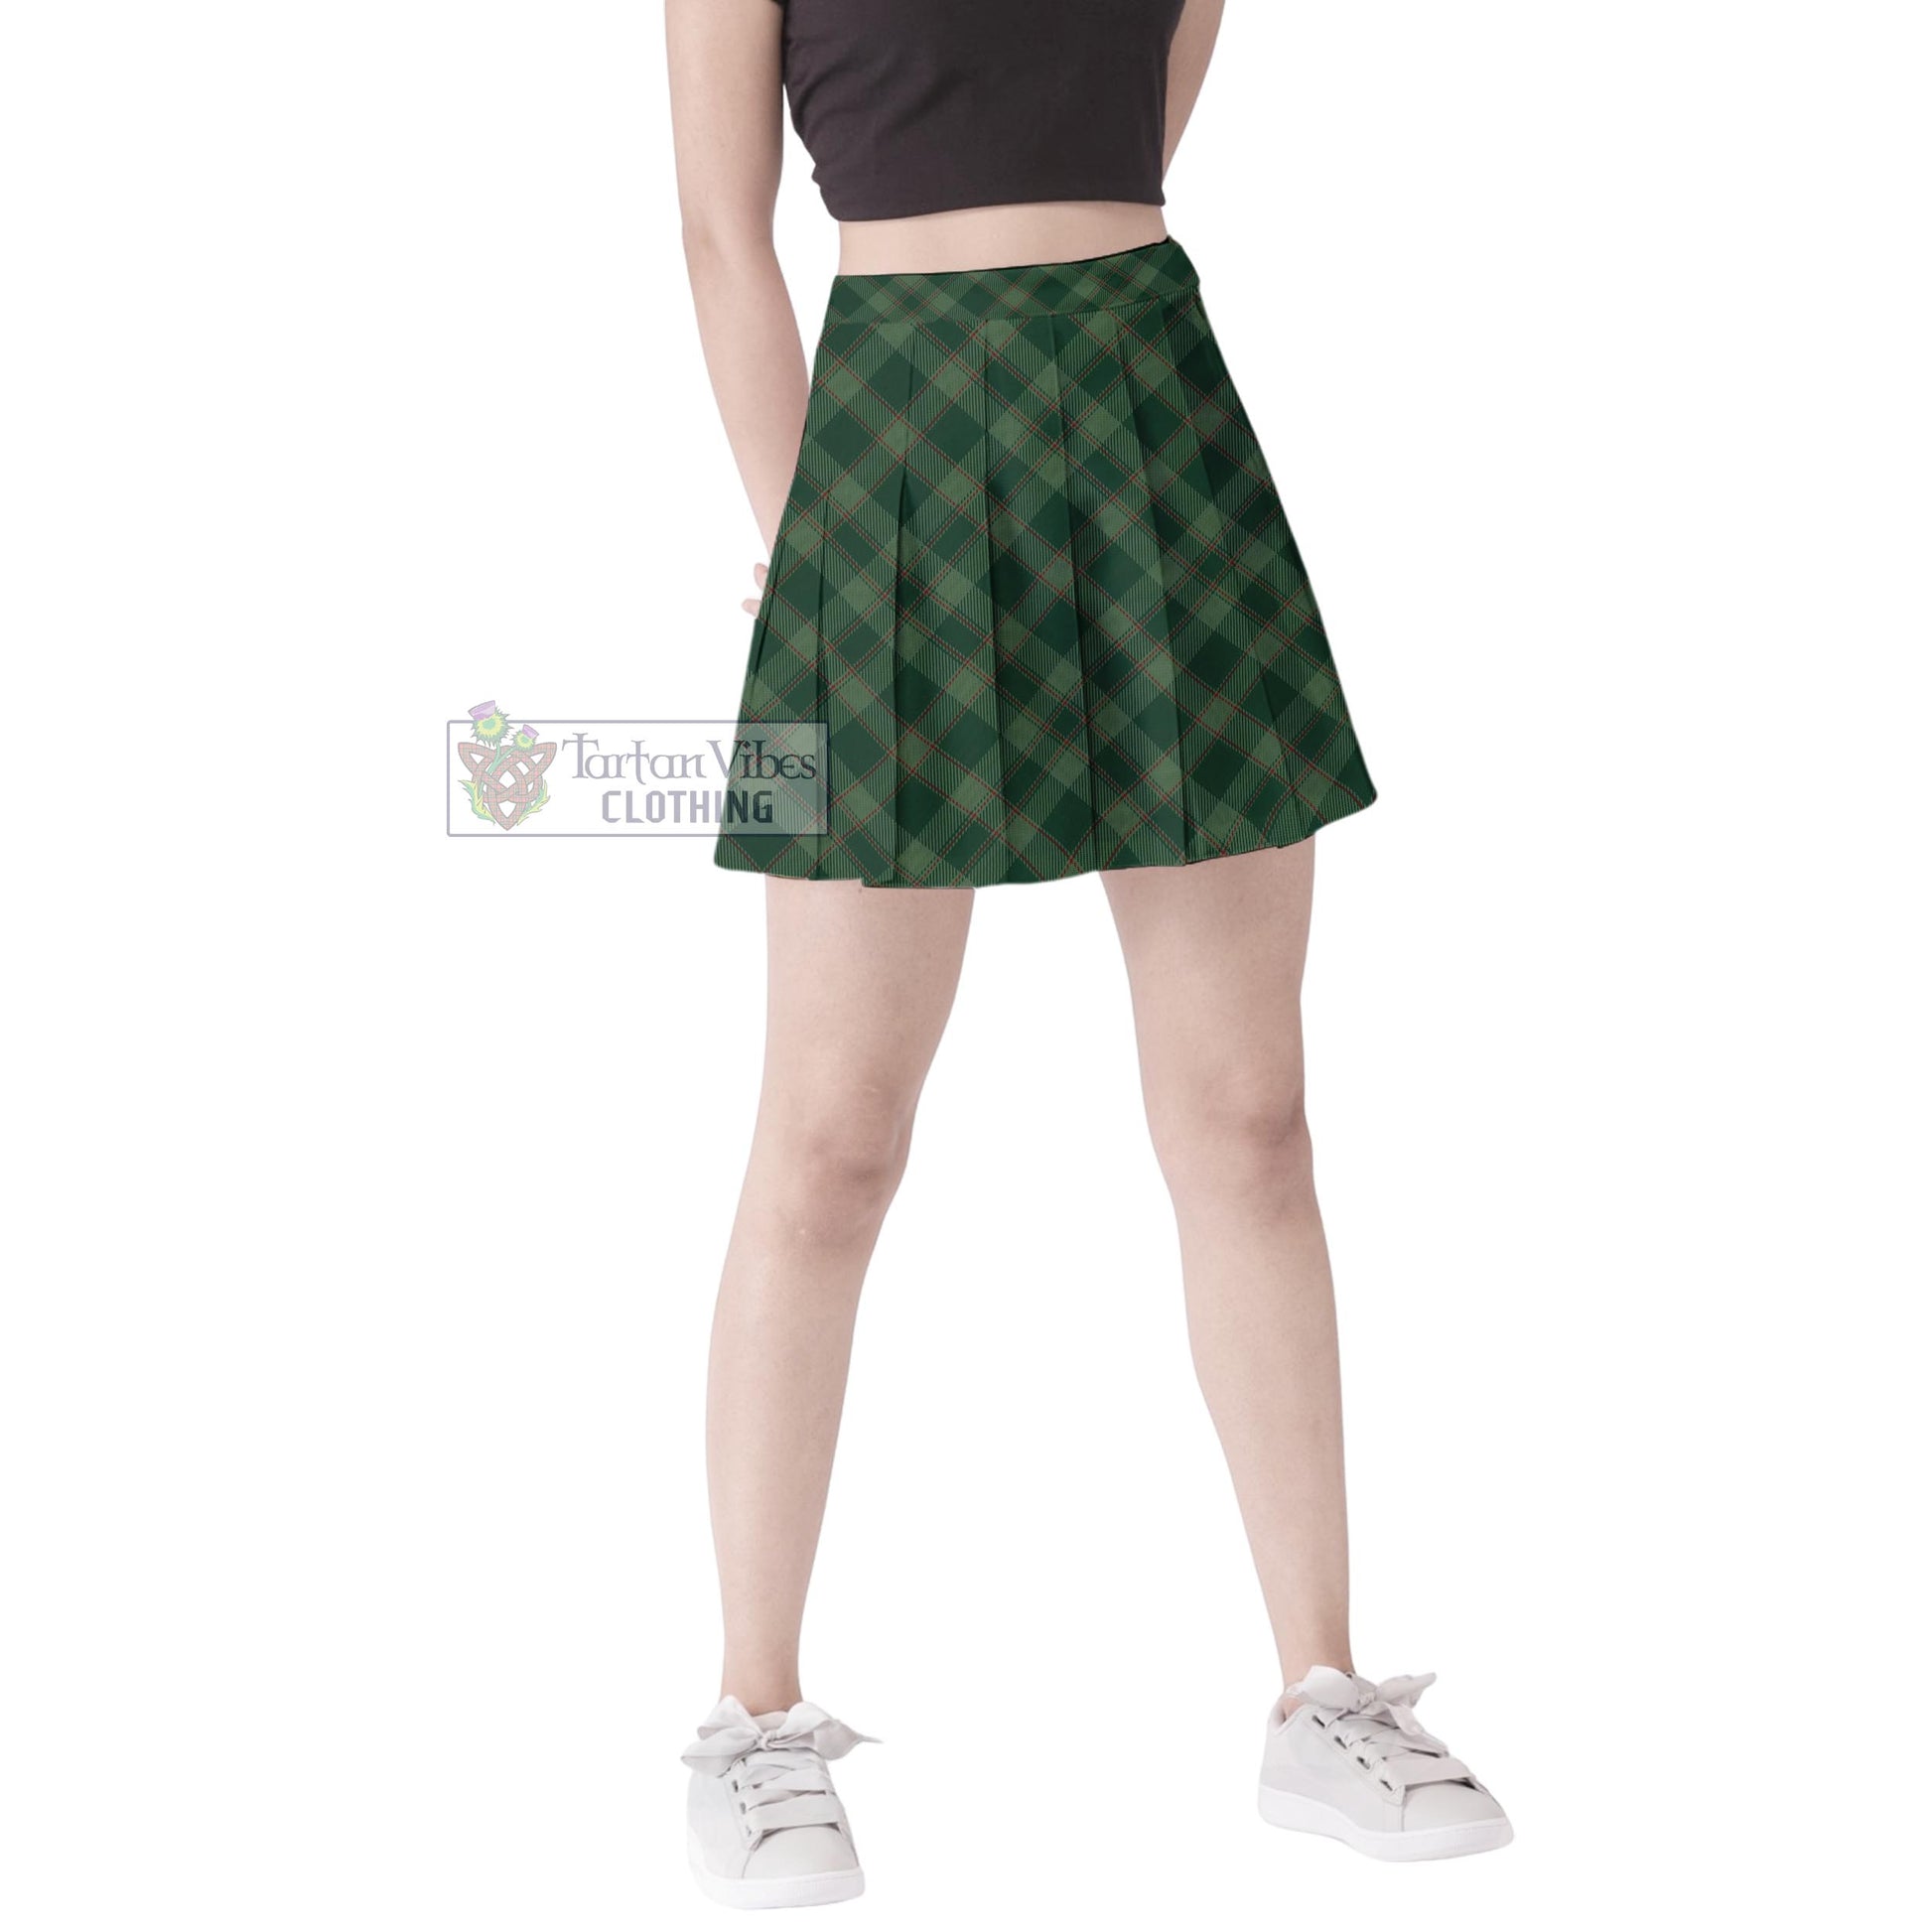 Tartan Vibes Clothing Donachie of Brockloch Hunting Tartan Women's Plated Mini Skirt